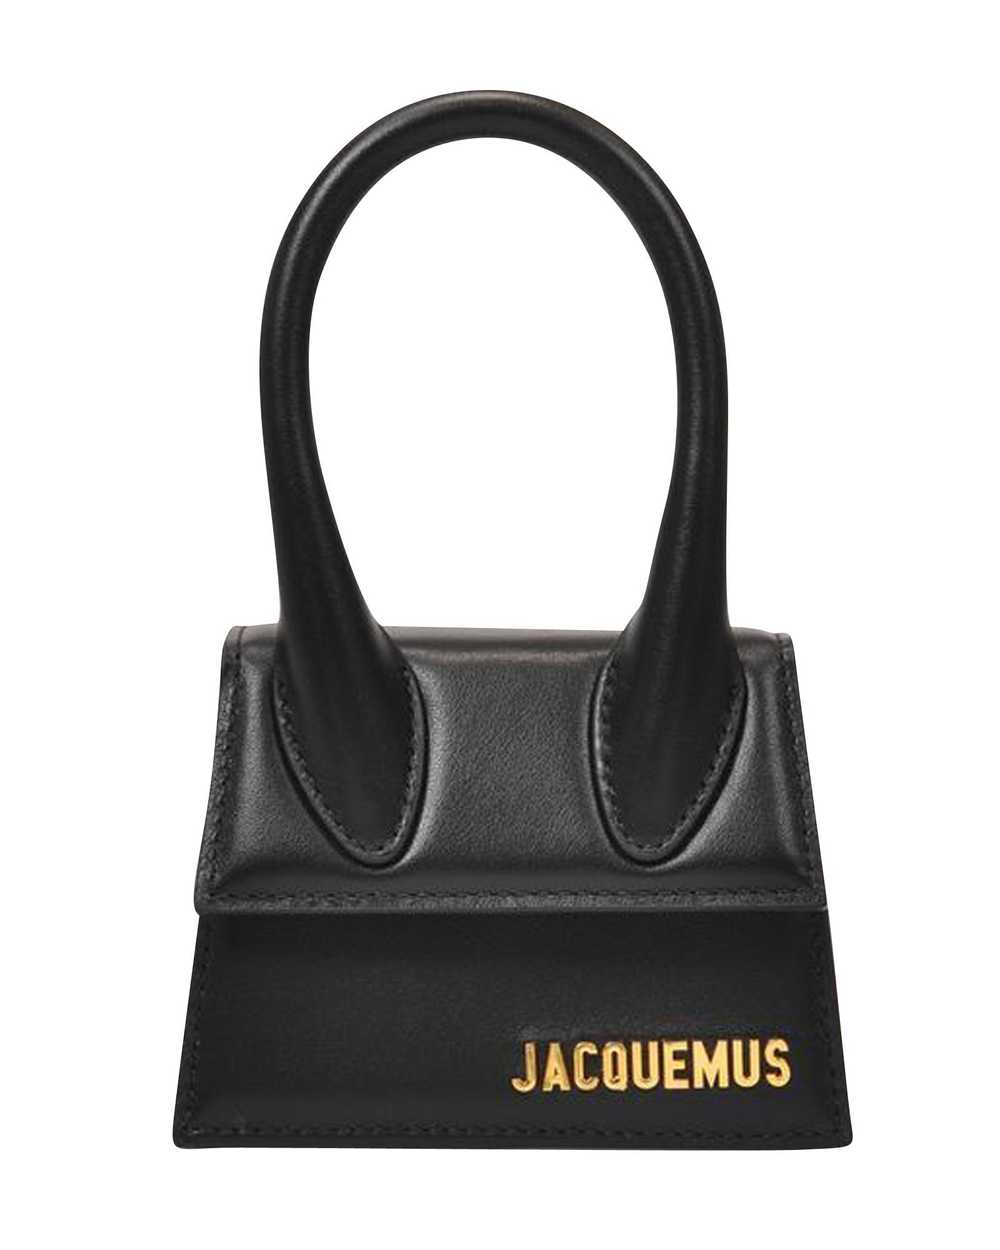 Product Details Black Leather Le Chiquito Bag - image 5